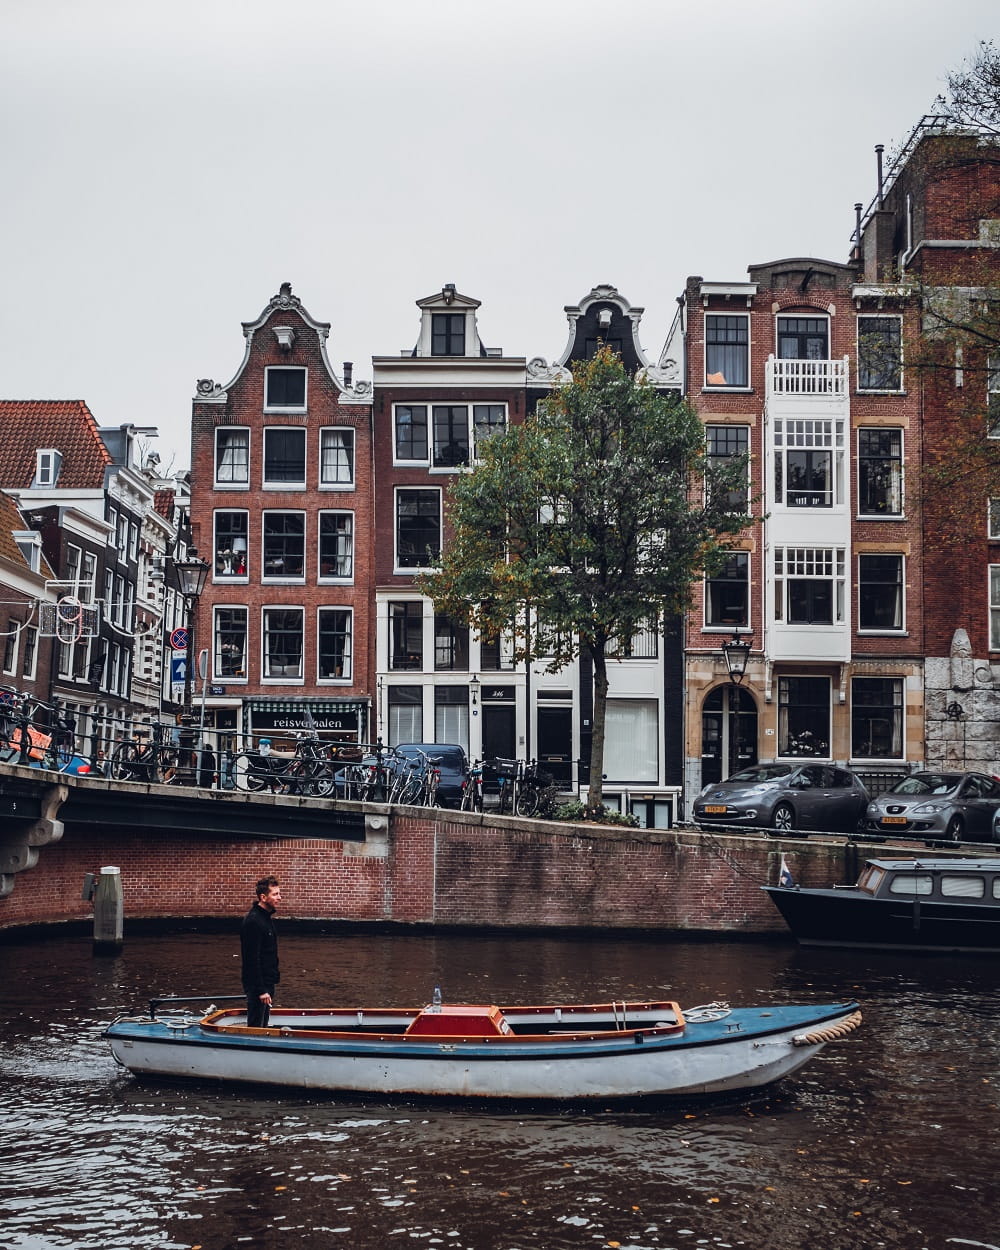 Streets of Amsterdam, Netherlands - Photographer Robin Benzrihem